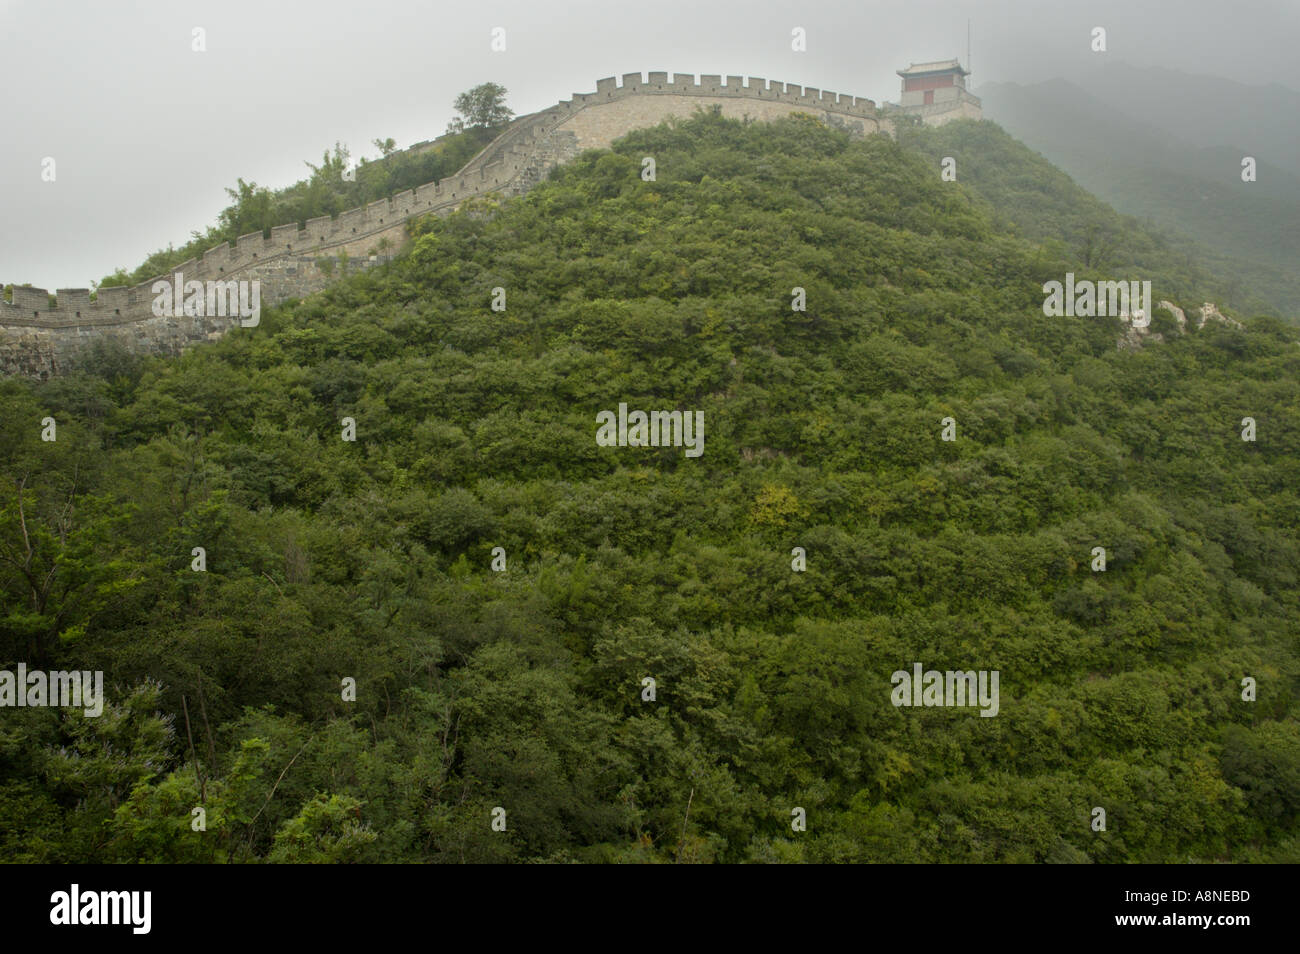 Lush foliage of trees surrounding the Great Wall at Juyongguan Gate, near Badaling, Beijing, China. Stock Photo